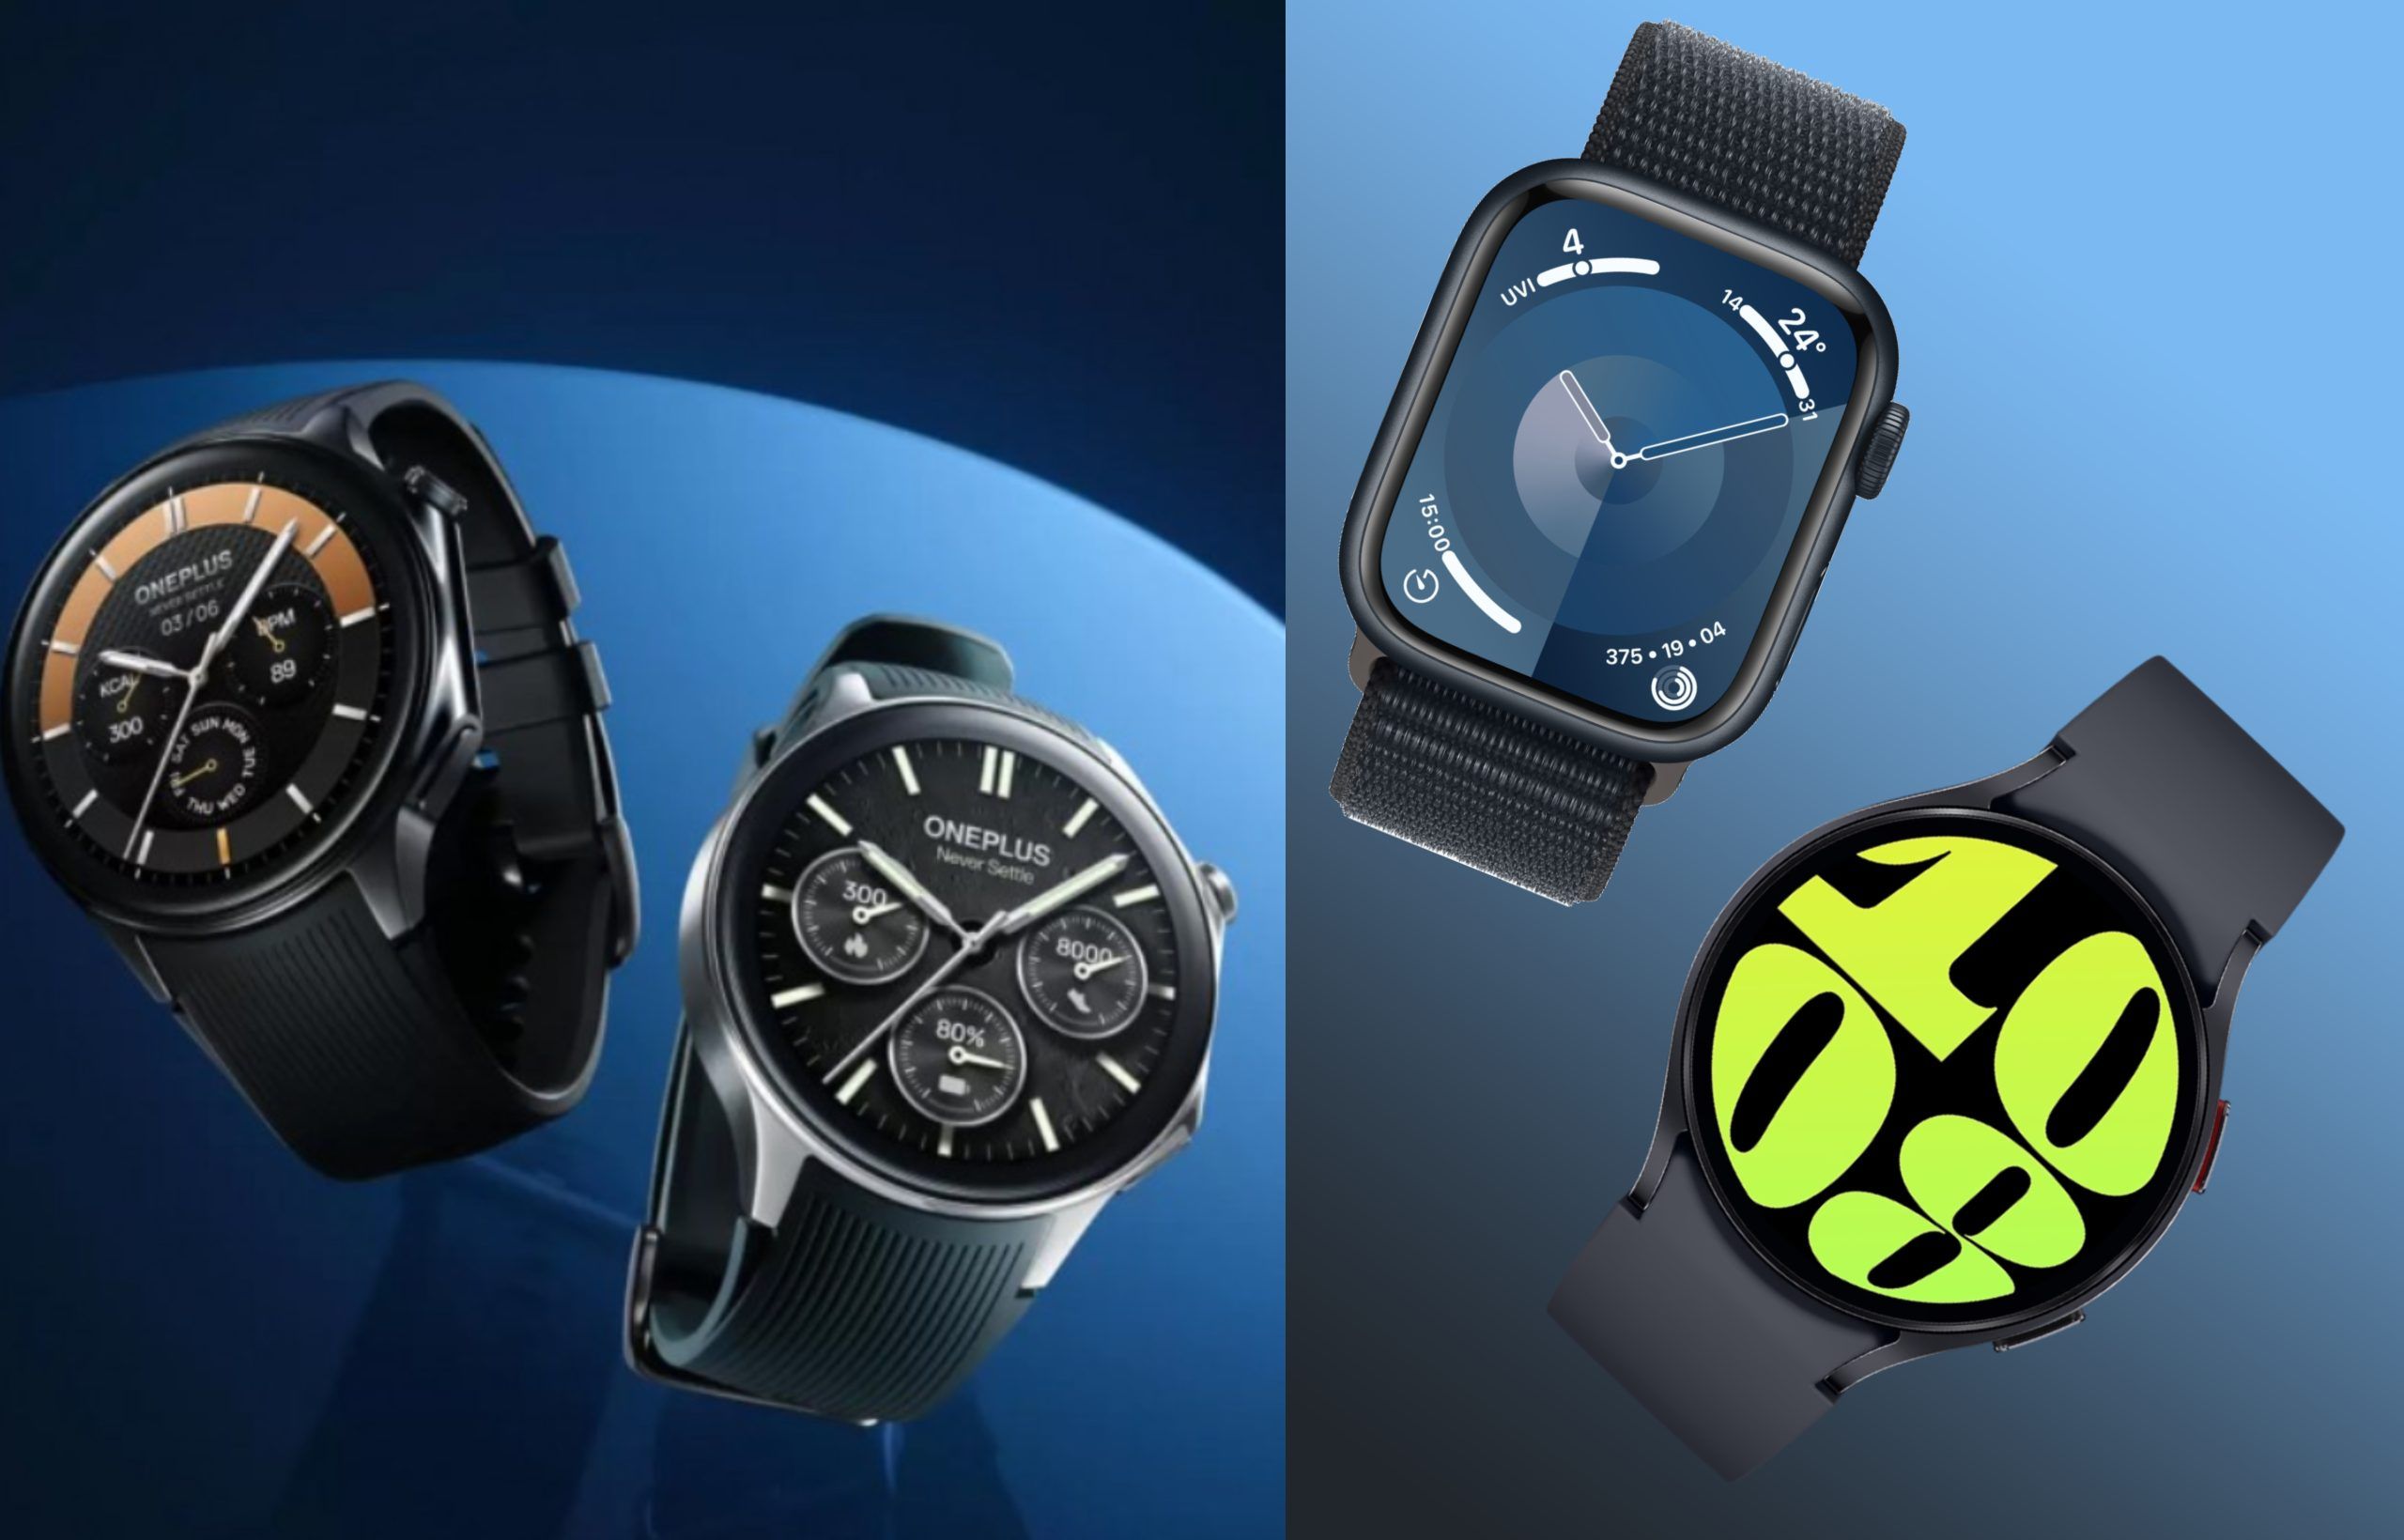 Oneplus Watch Vs Samsung Galaxy Watch 3 Vs Active 2: The Ultimate Smartwatch Battle